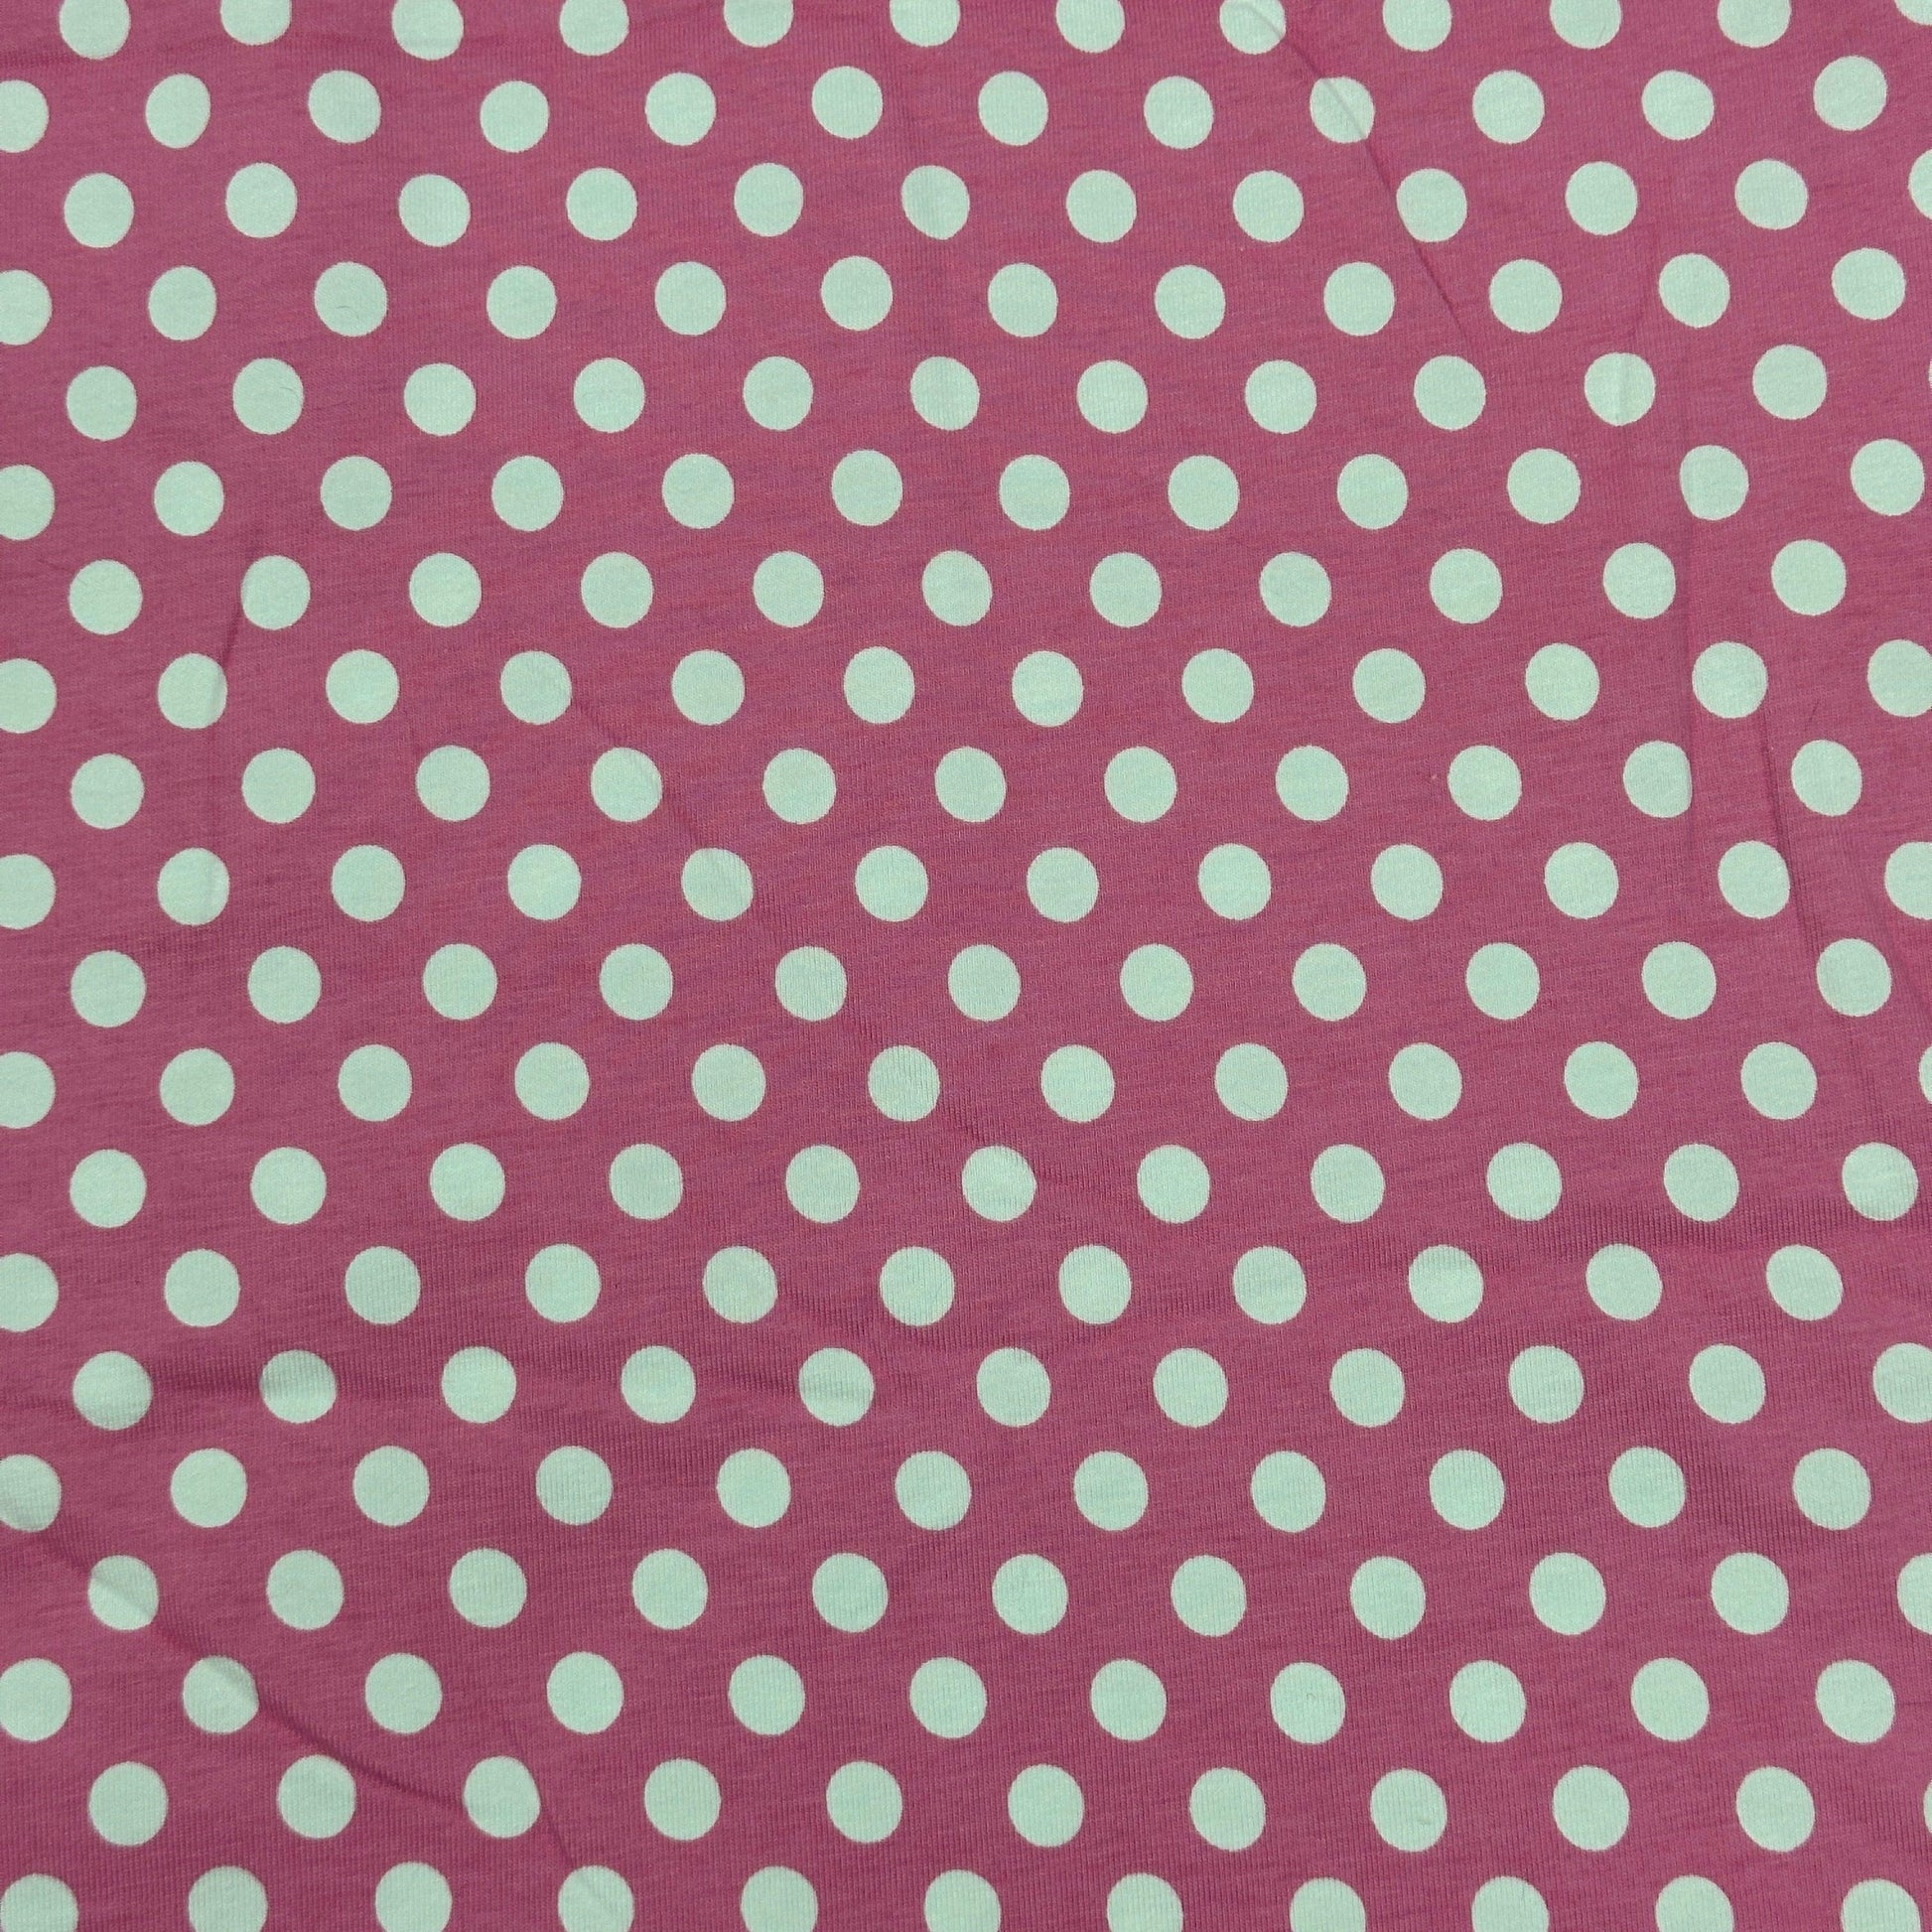 White Dots on Pink Cotton/Spandex Jersey Fabric - Nature's Fabrics